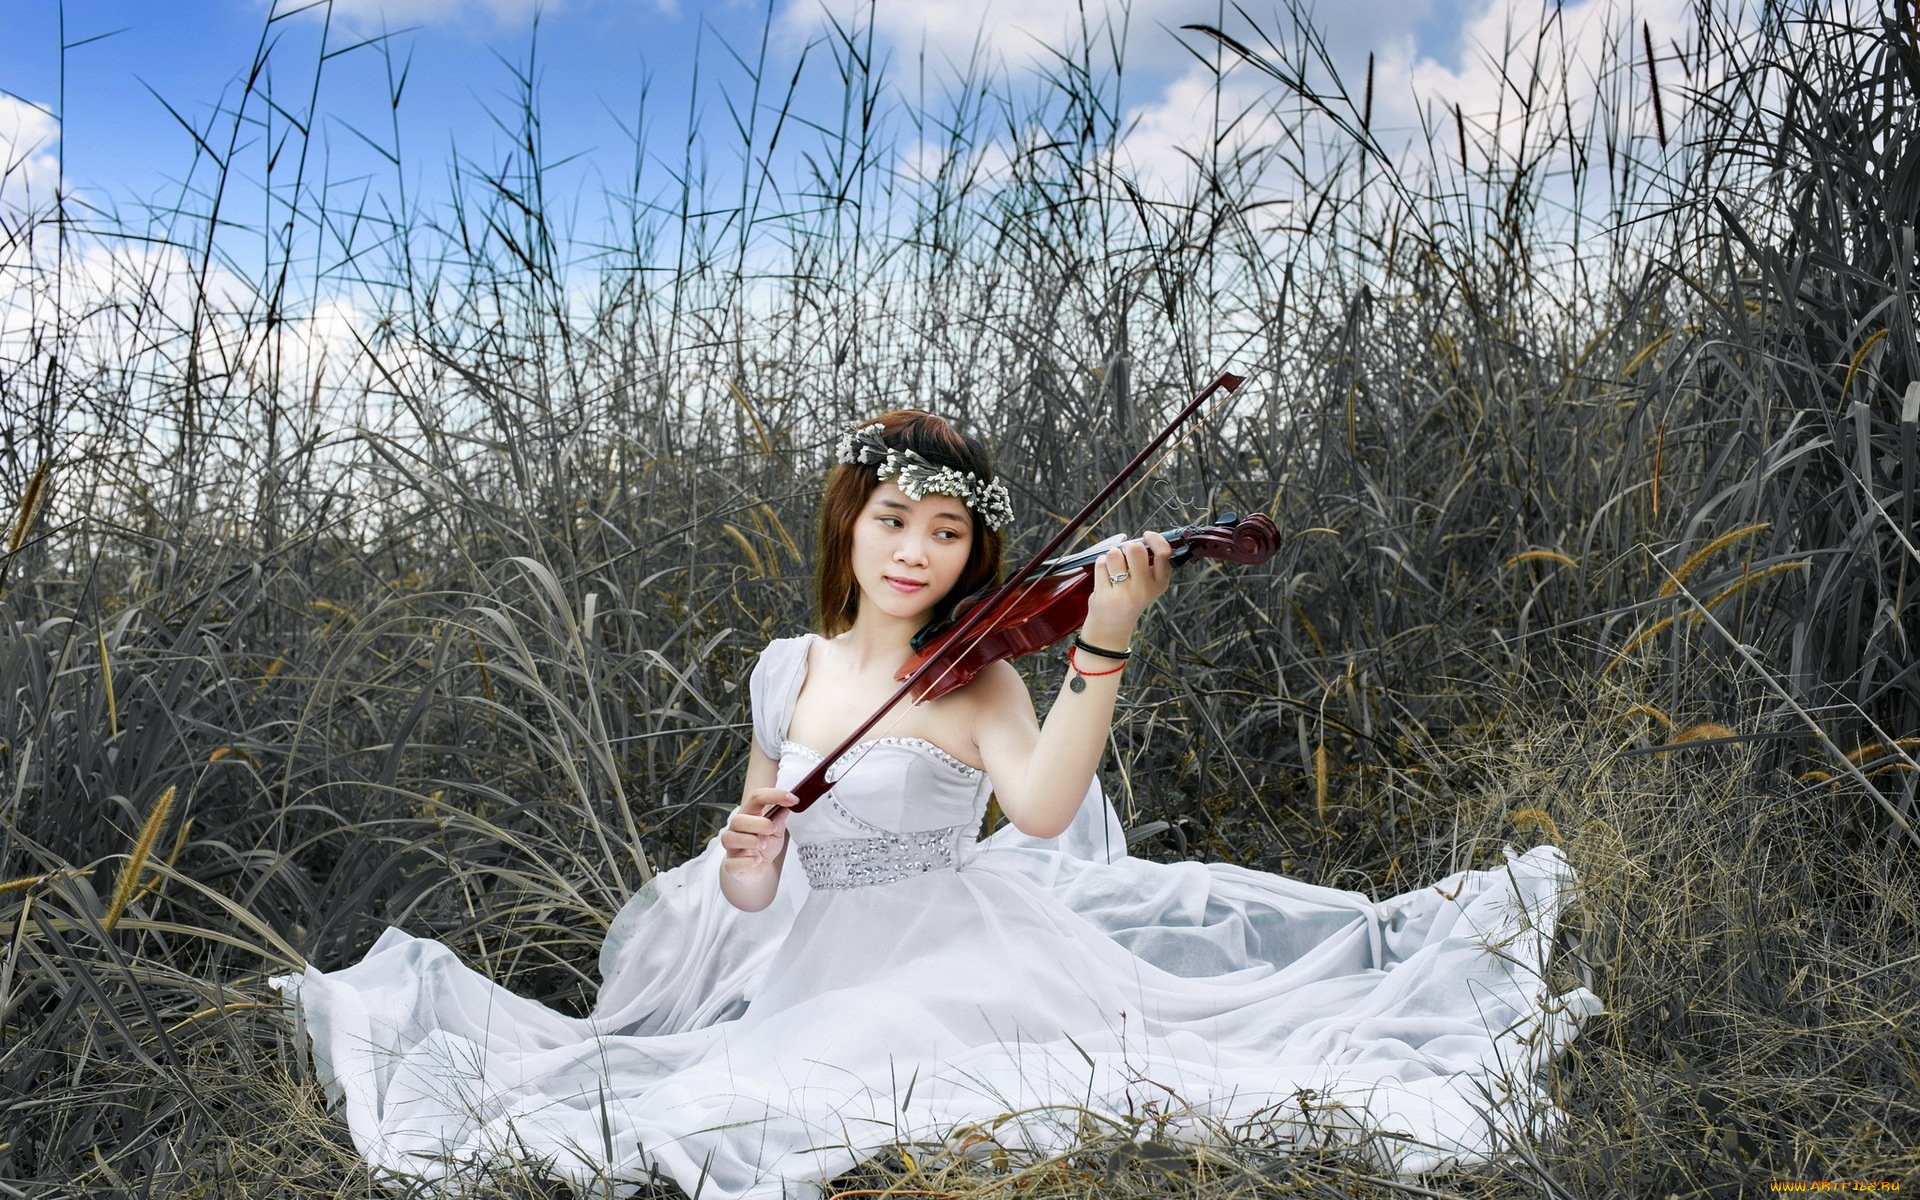 музыка, -другое, девушка, скрипка, азиатка, трава, природа